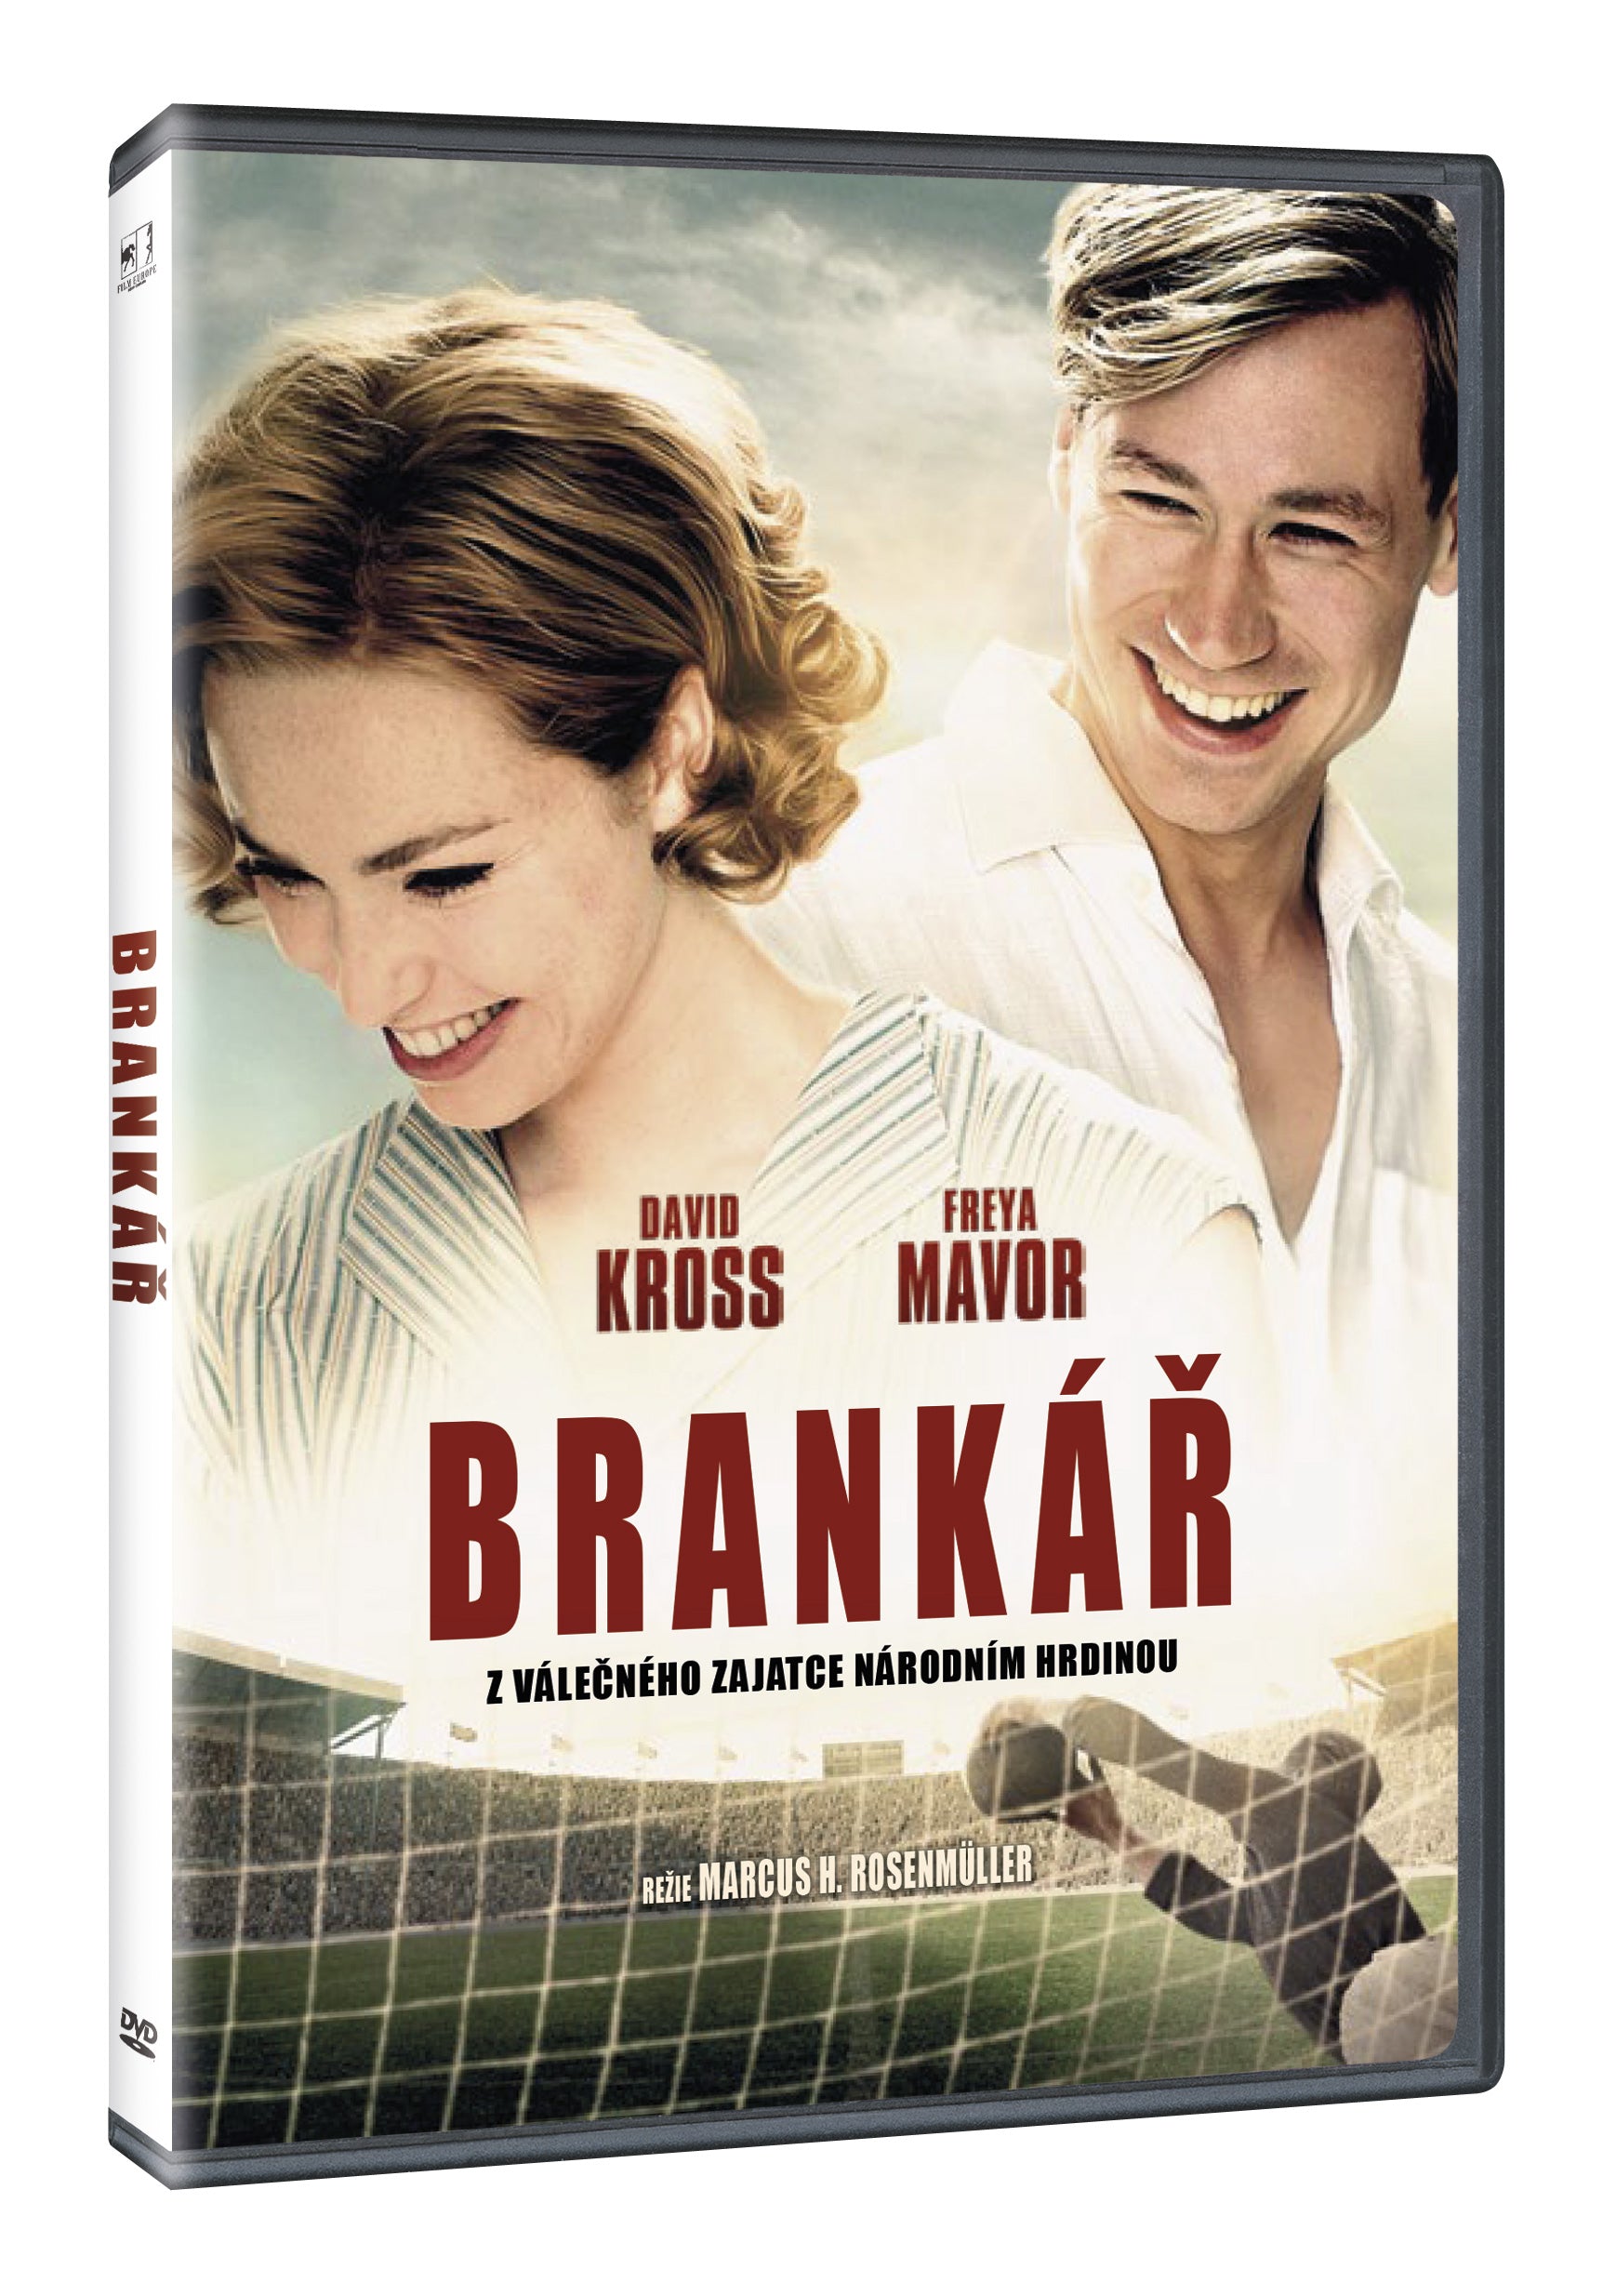 Brankar DVD / The Keeper